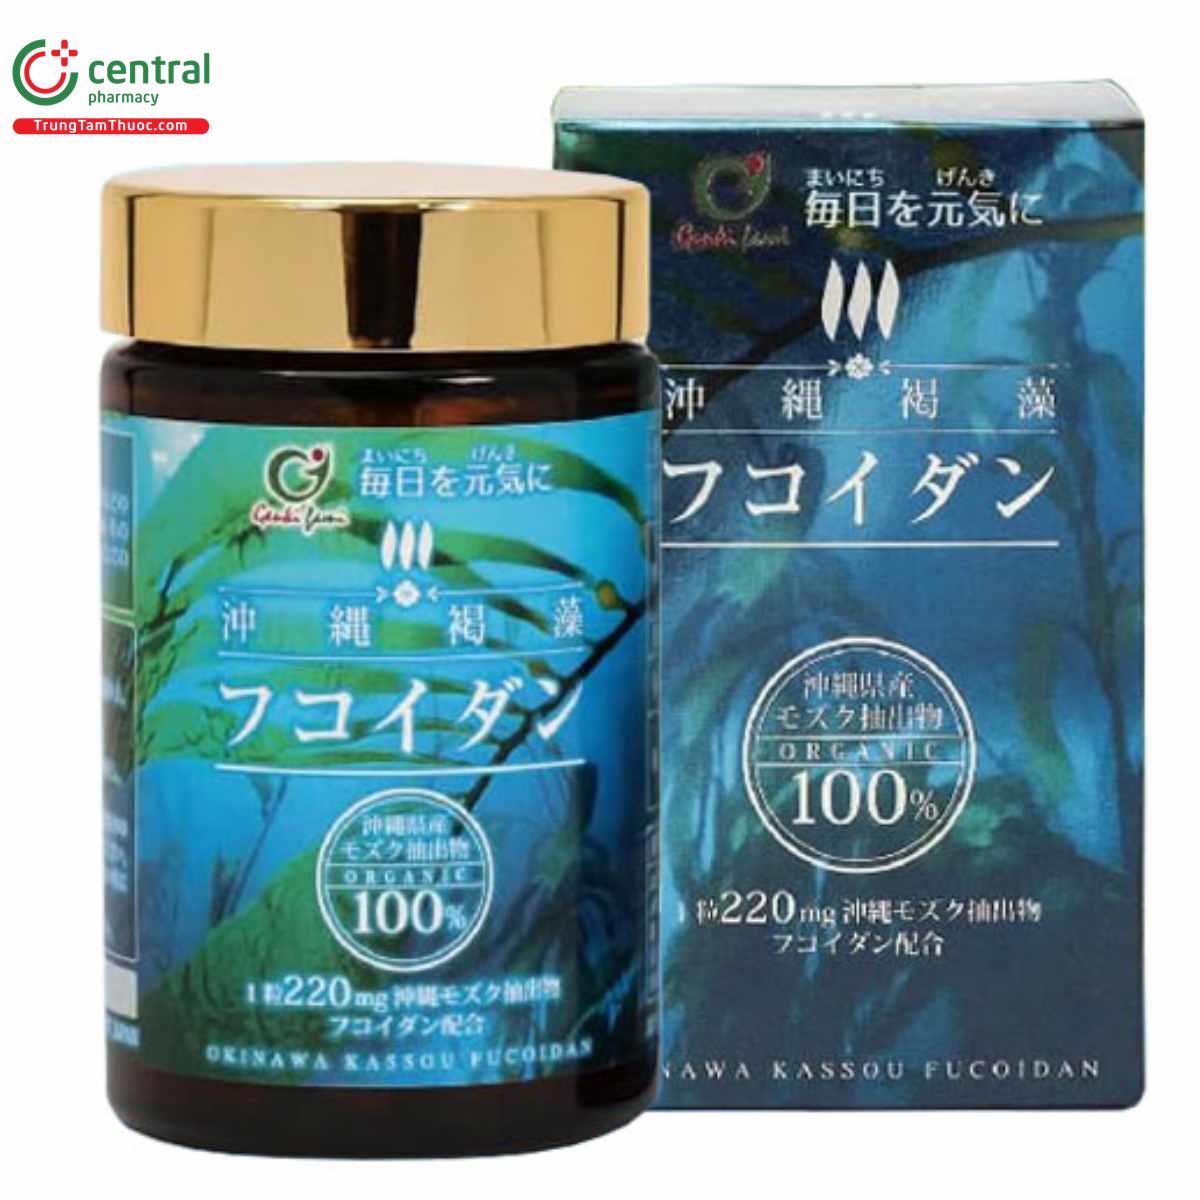 okinawa kassou fucoidan 1 O5306